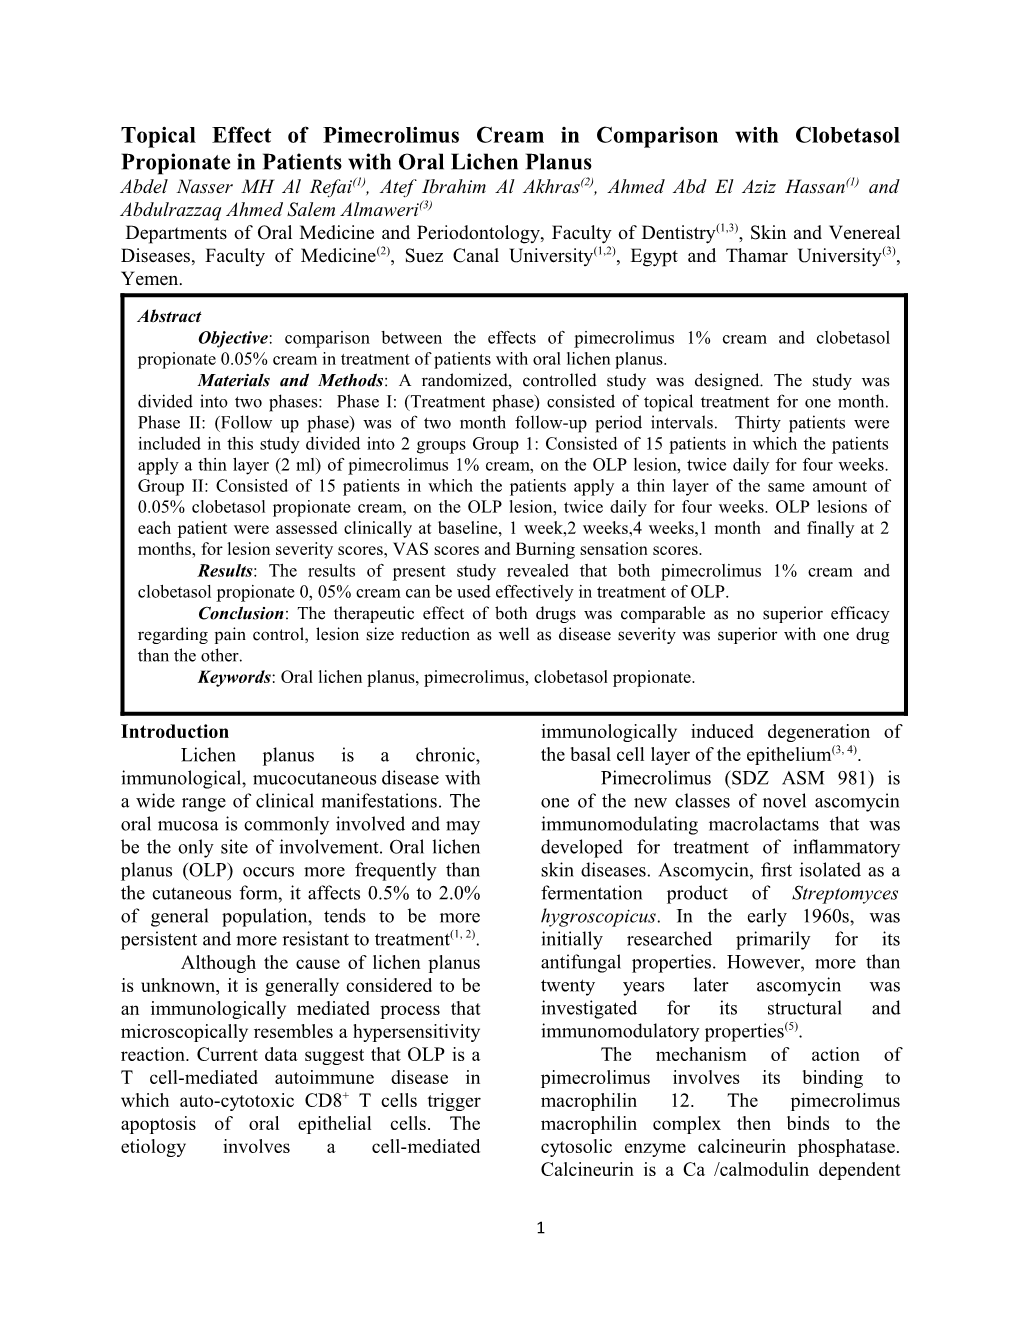 Topical Effect of Pimecrolimus Cream in Comparison with Clobetasol Propionate in Patients